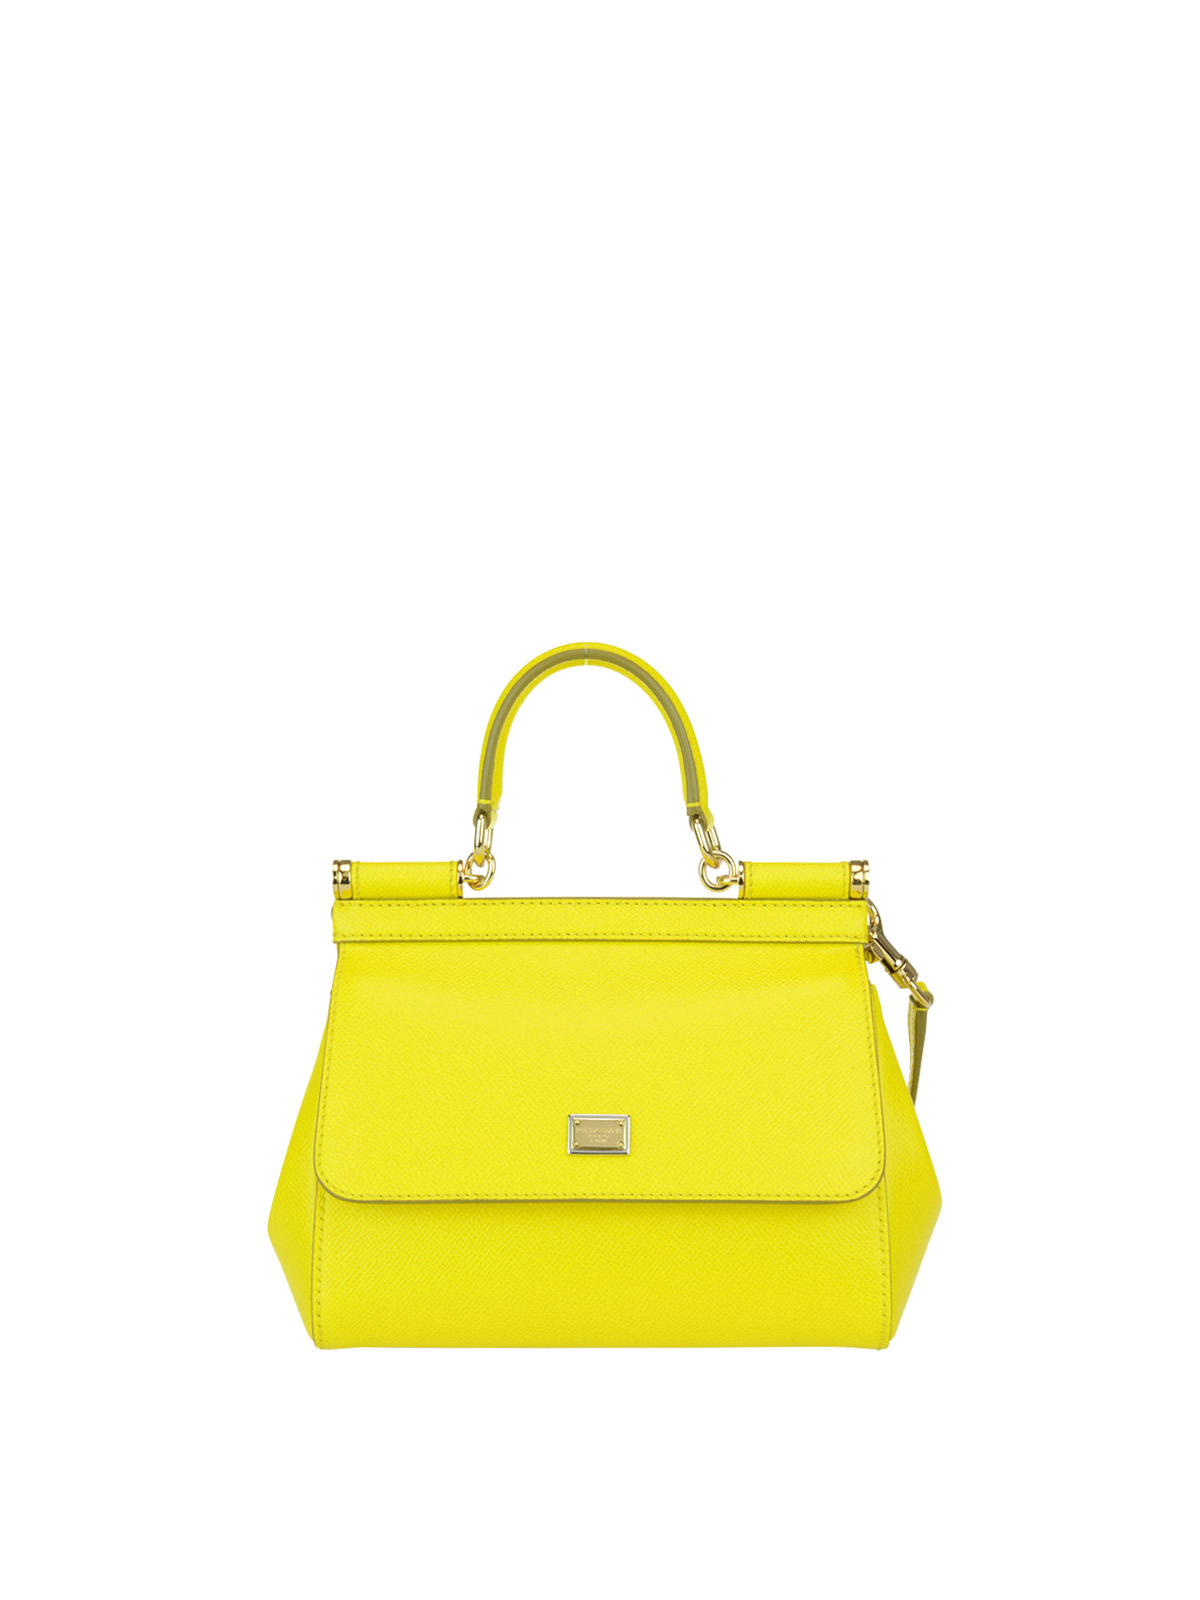 yellow leather bag 